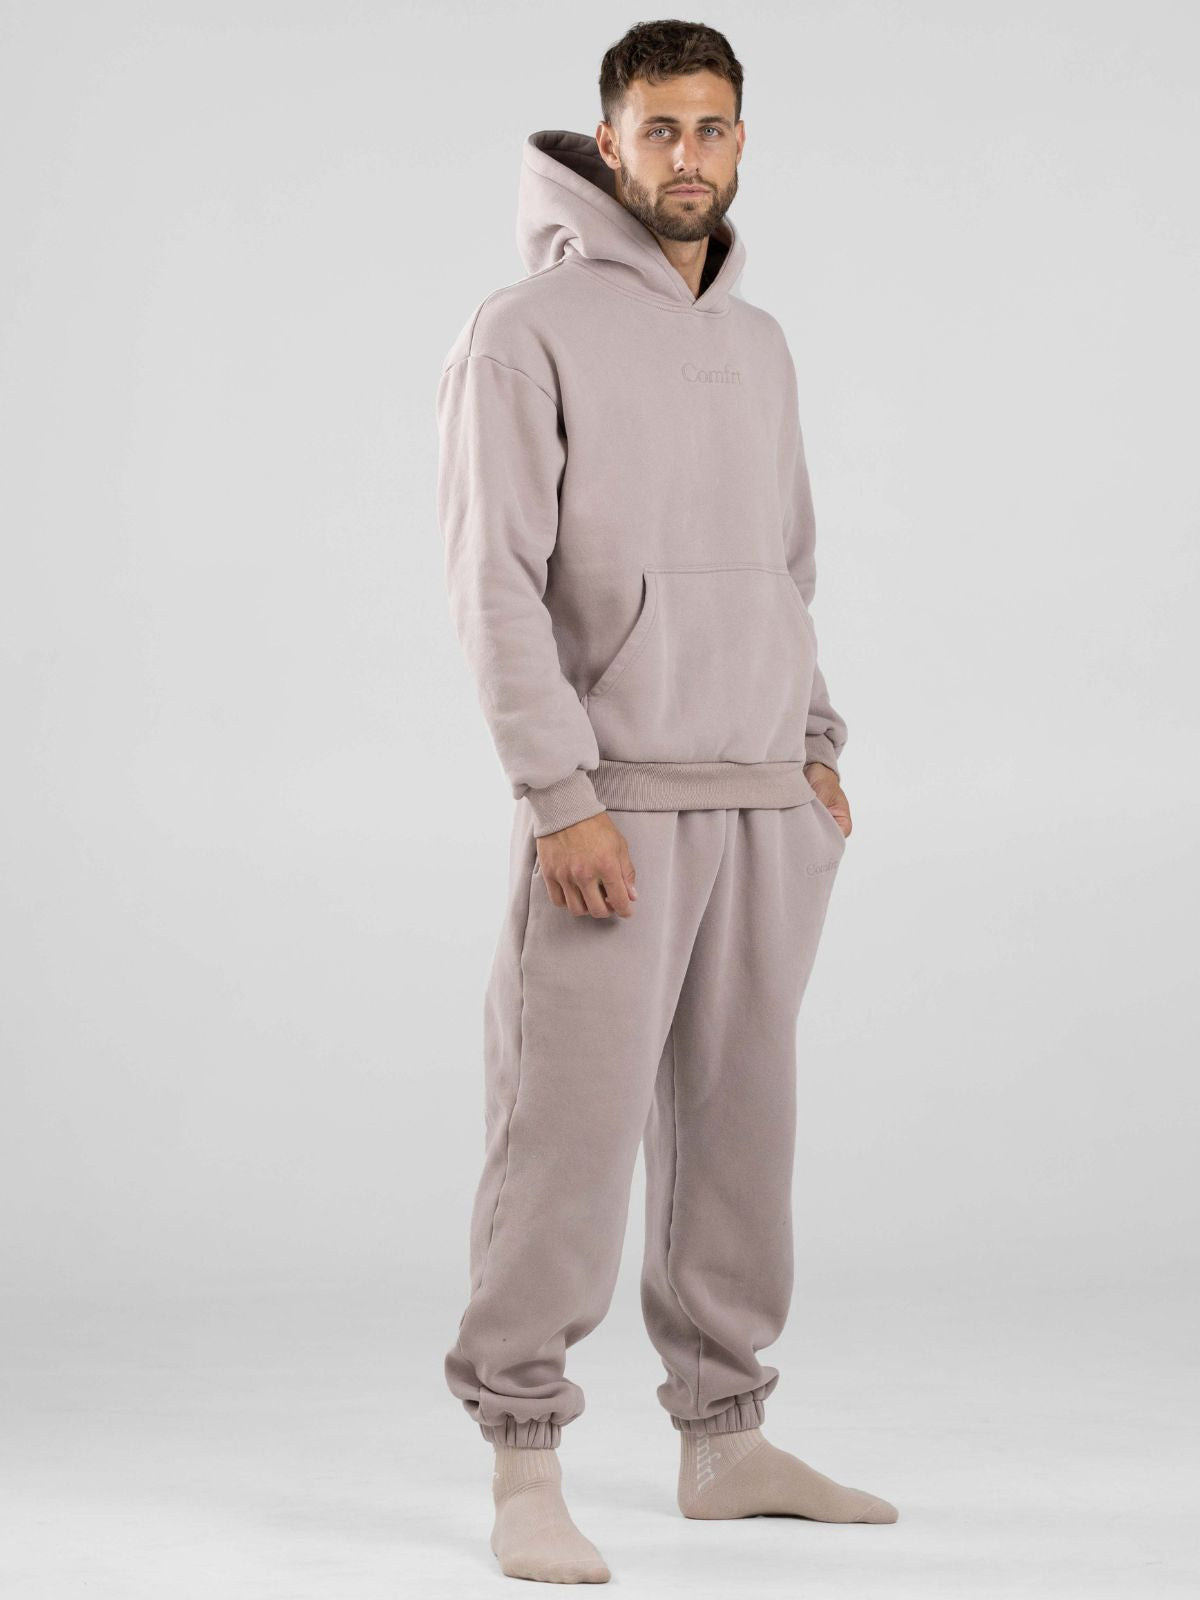 NEW Comfrt Clothing SIGNATURE Hoodie Size Medium Bark Sweatshirt KJHU01  Unisex